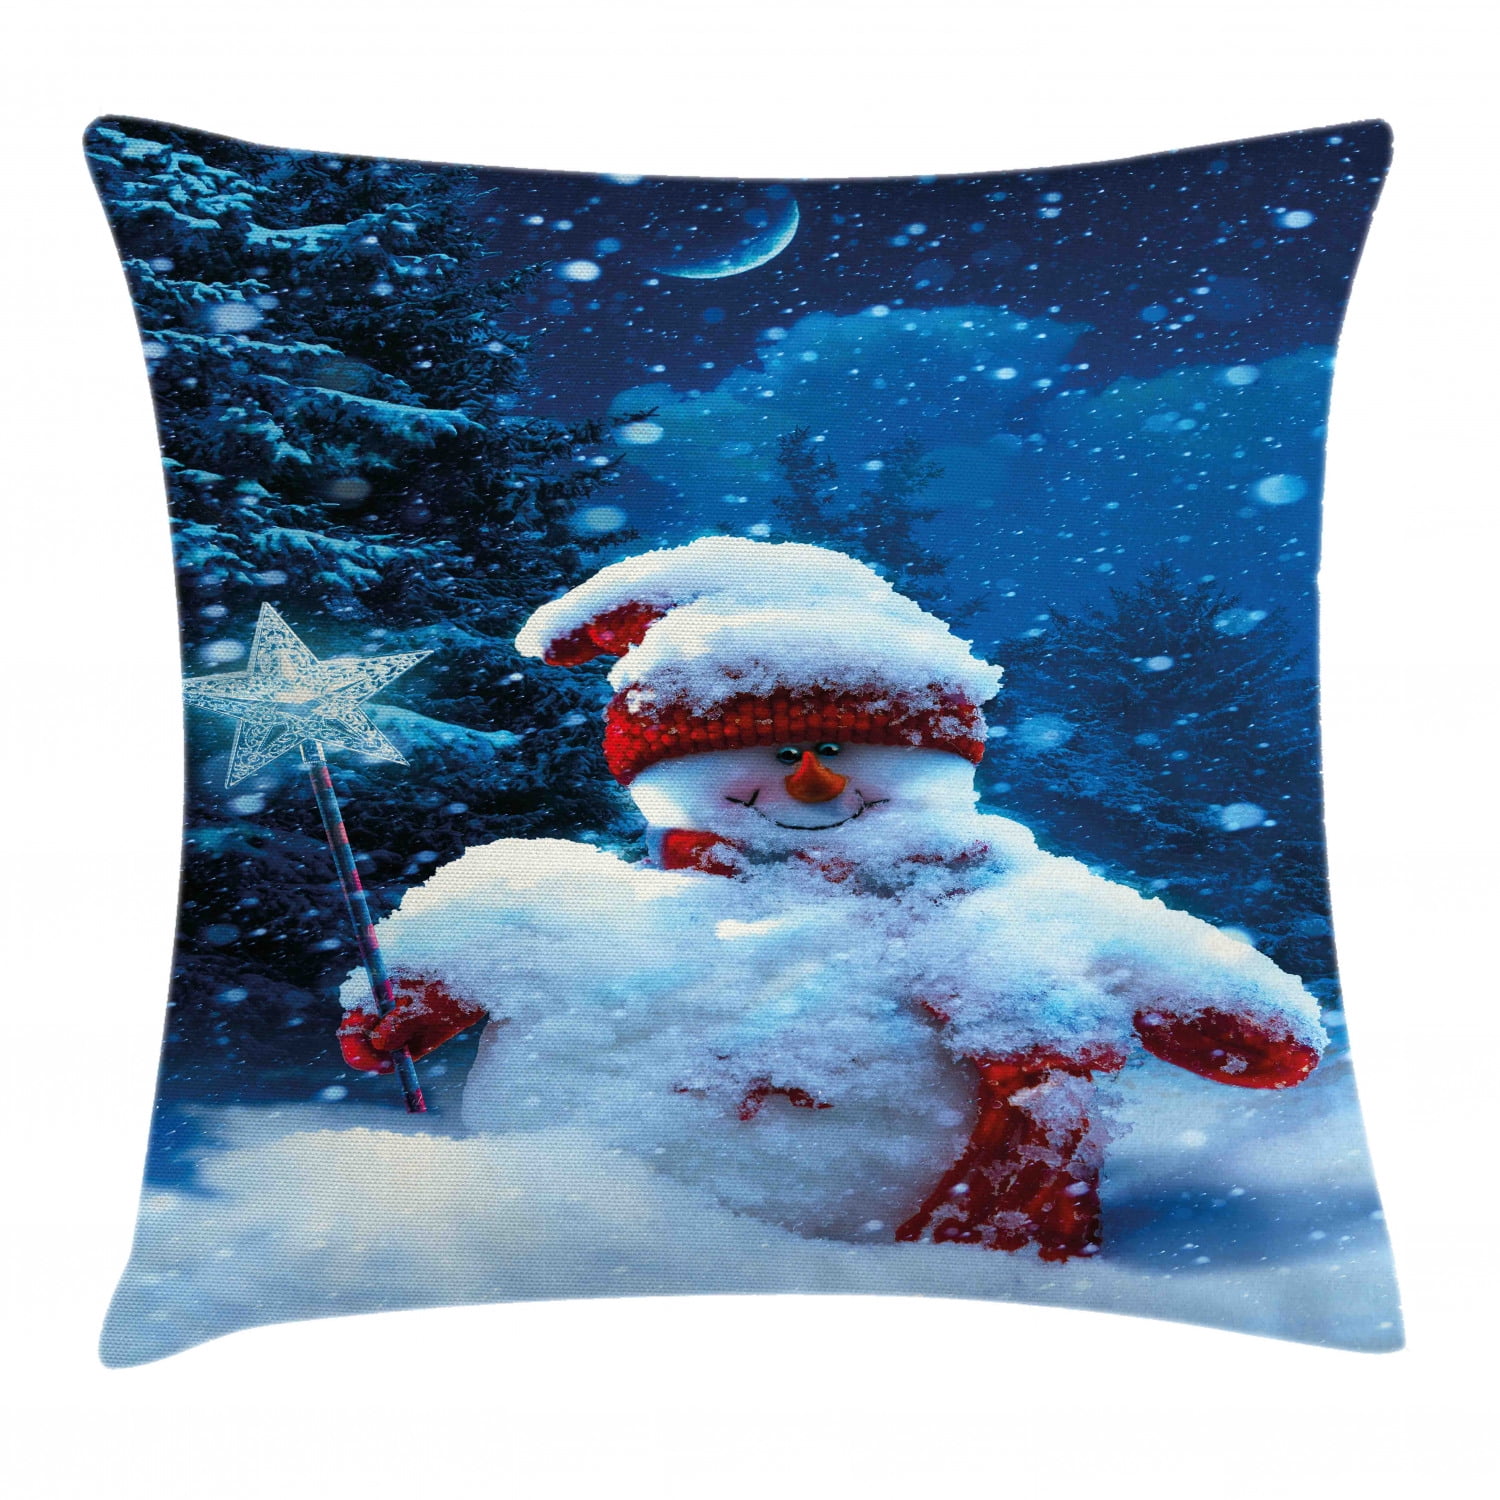 18"*18" Christmas Santa Claus Snowman Cushion Cover Zippered Square Pillow Case